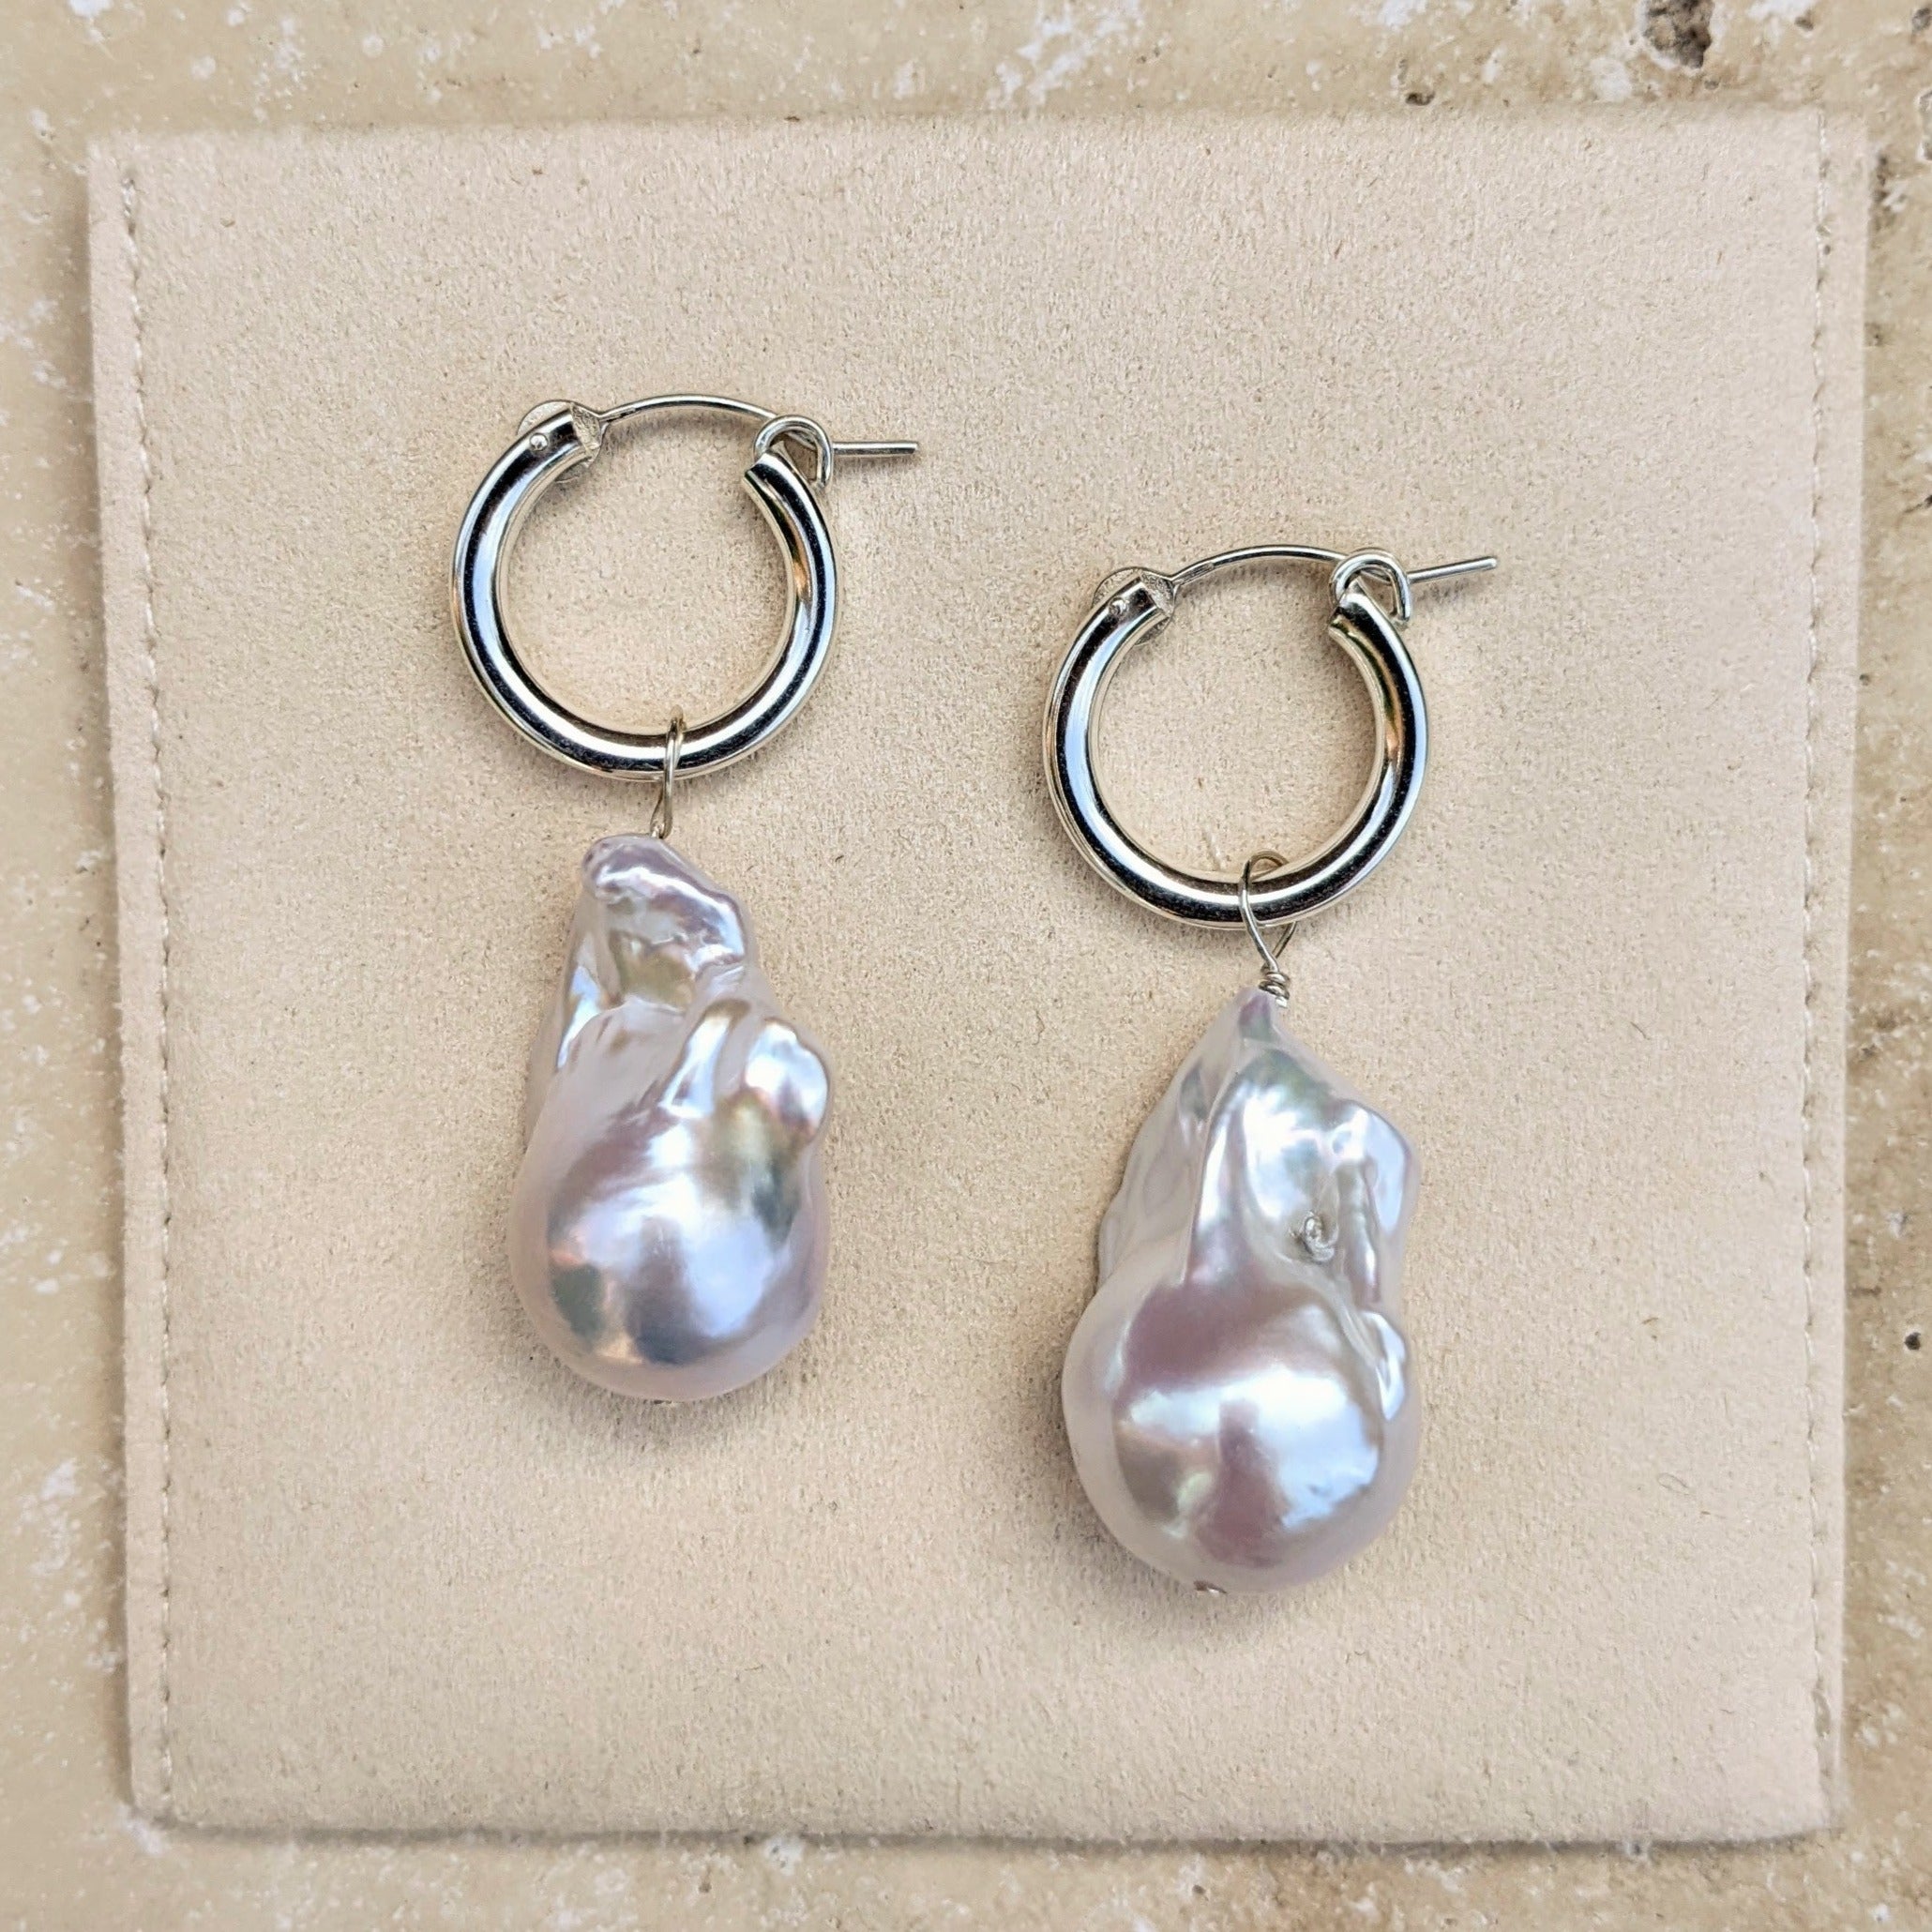 Large sterling silver hoop earrings with large baroque pearls